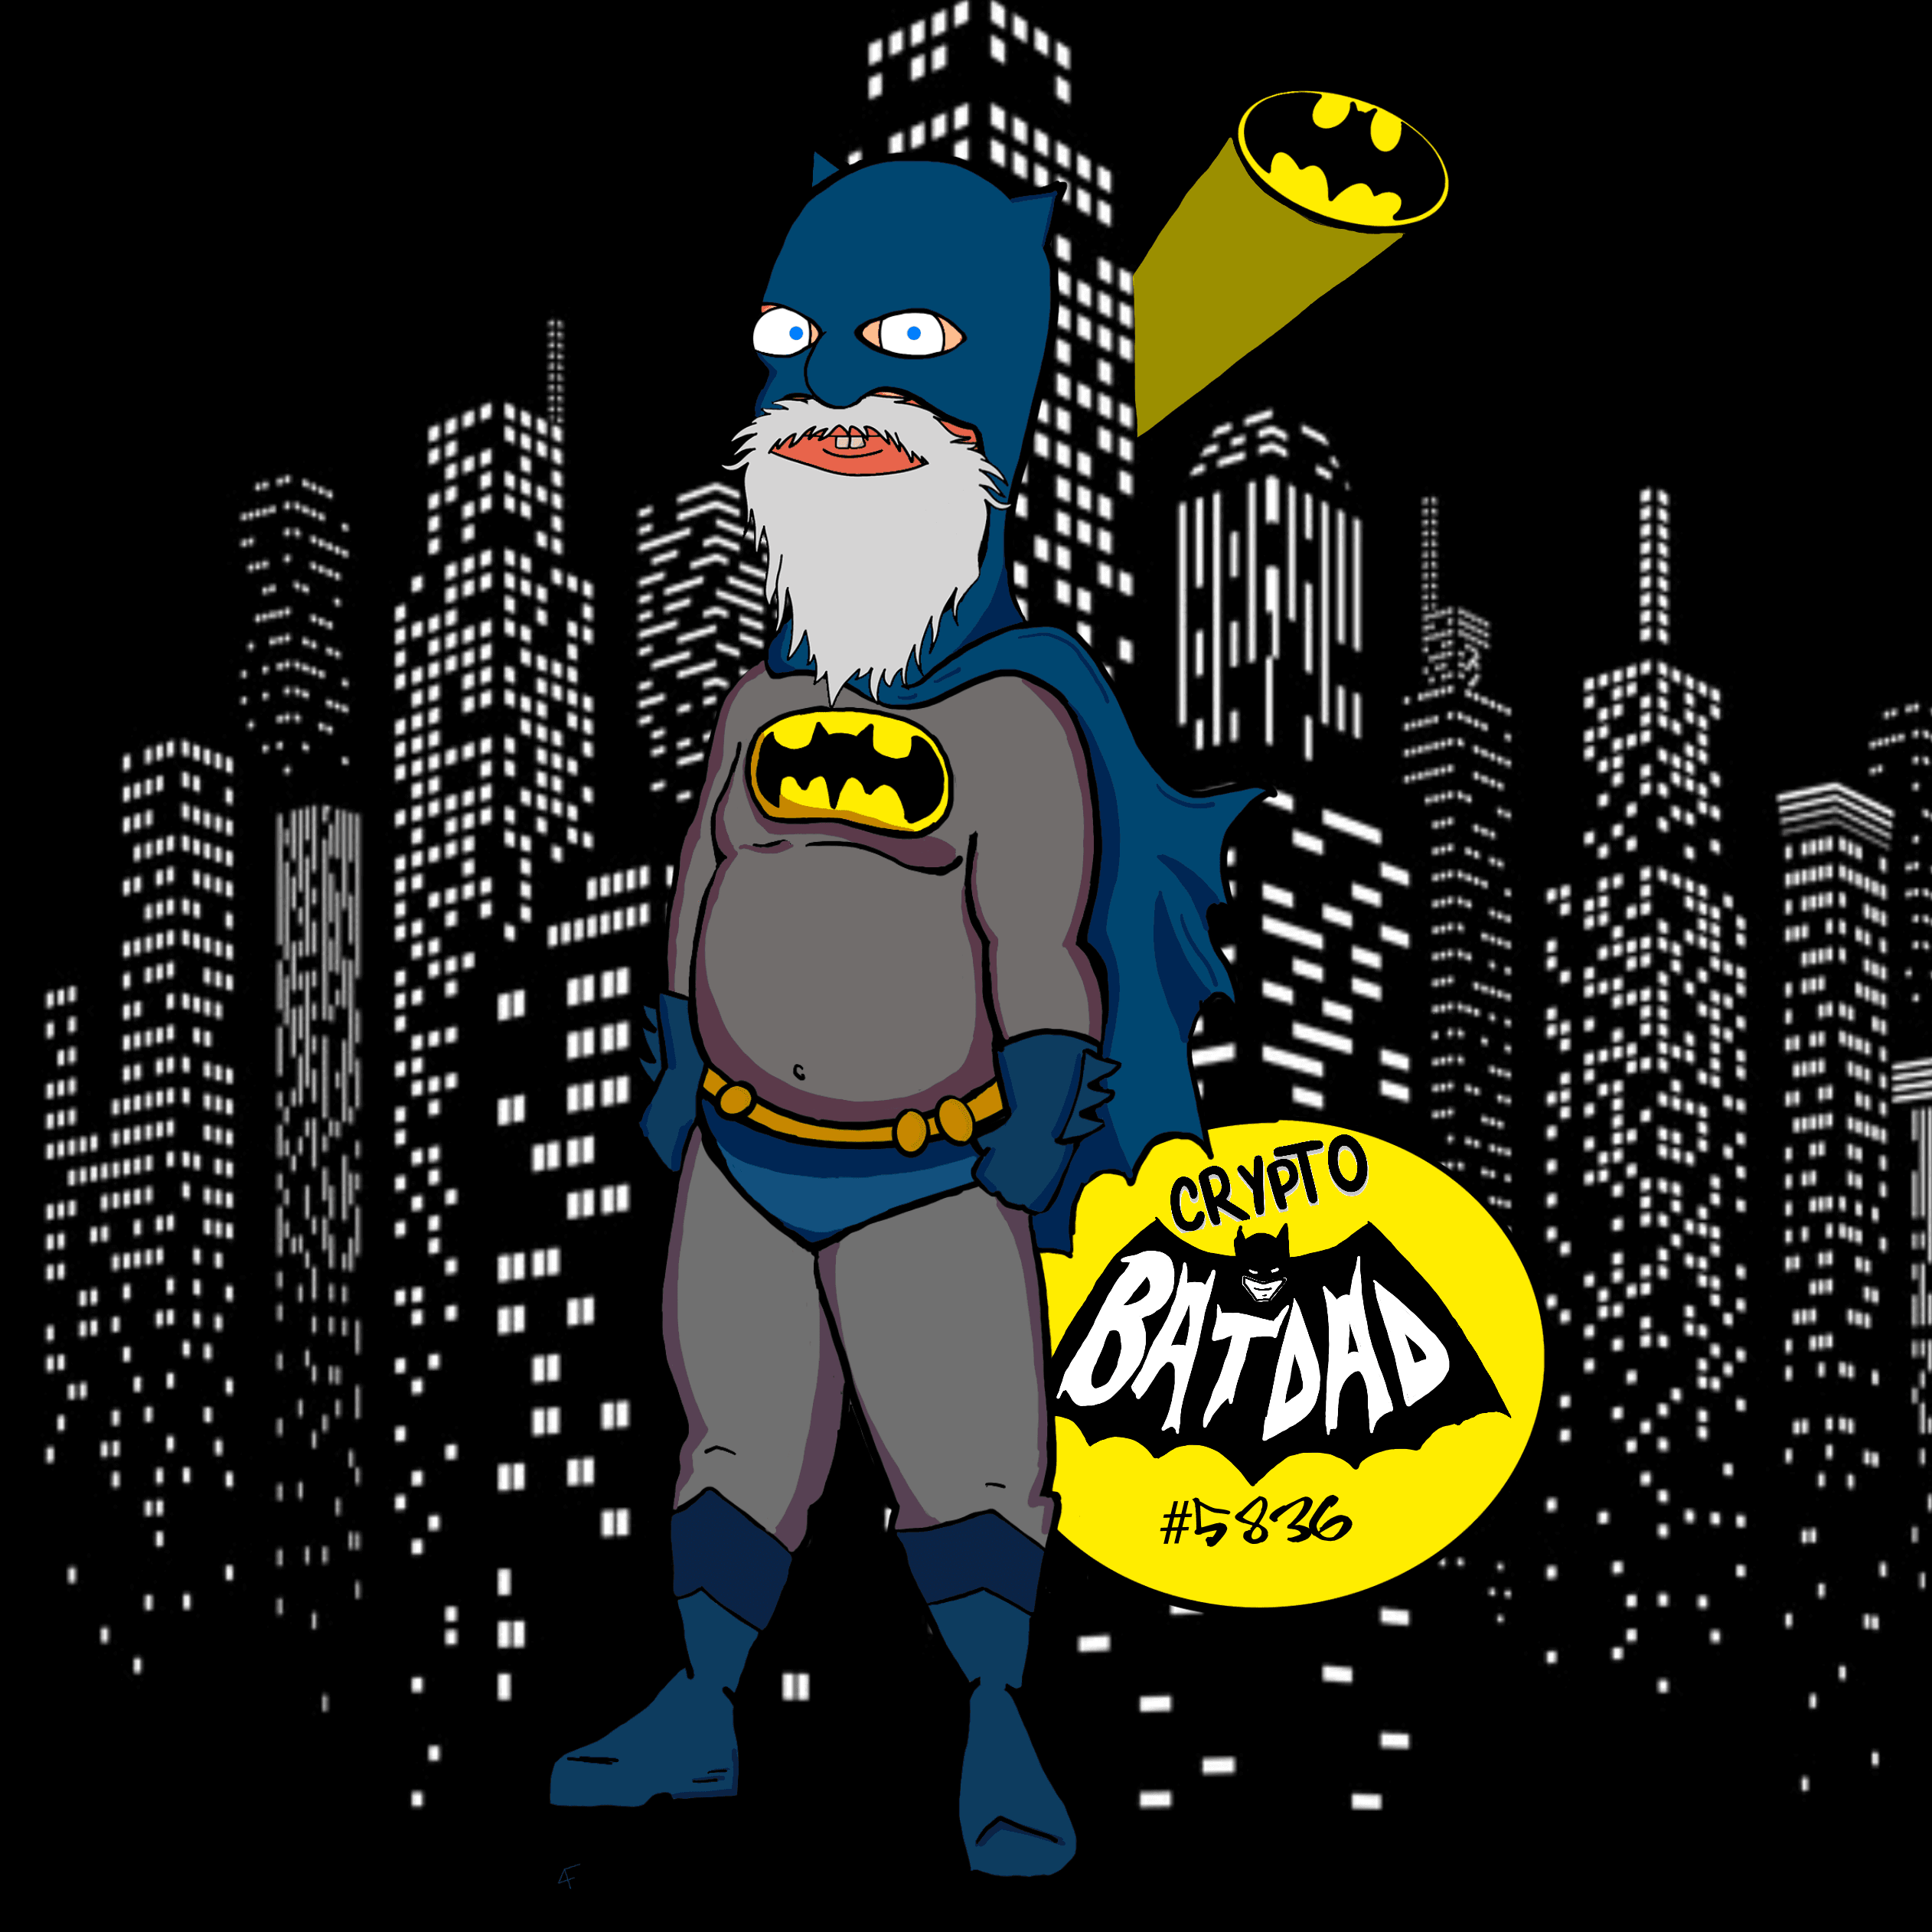 Crypto Bat Dad #5836